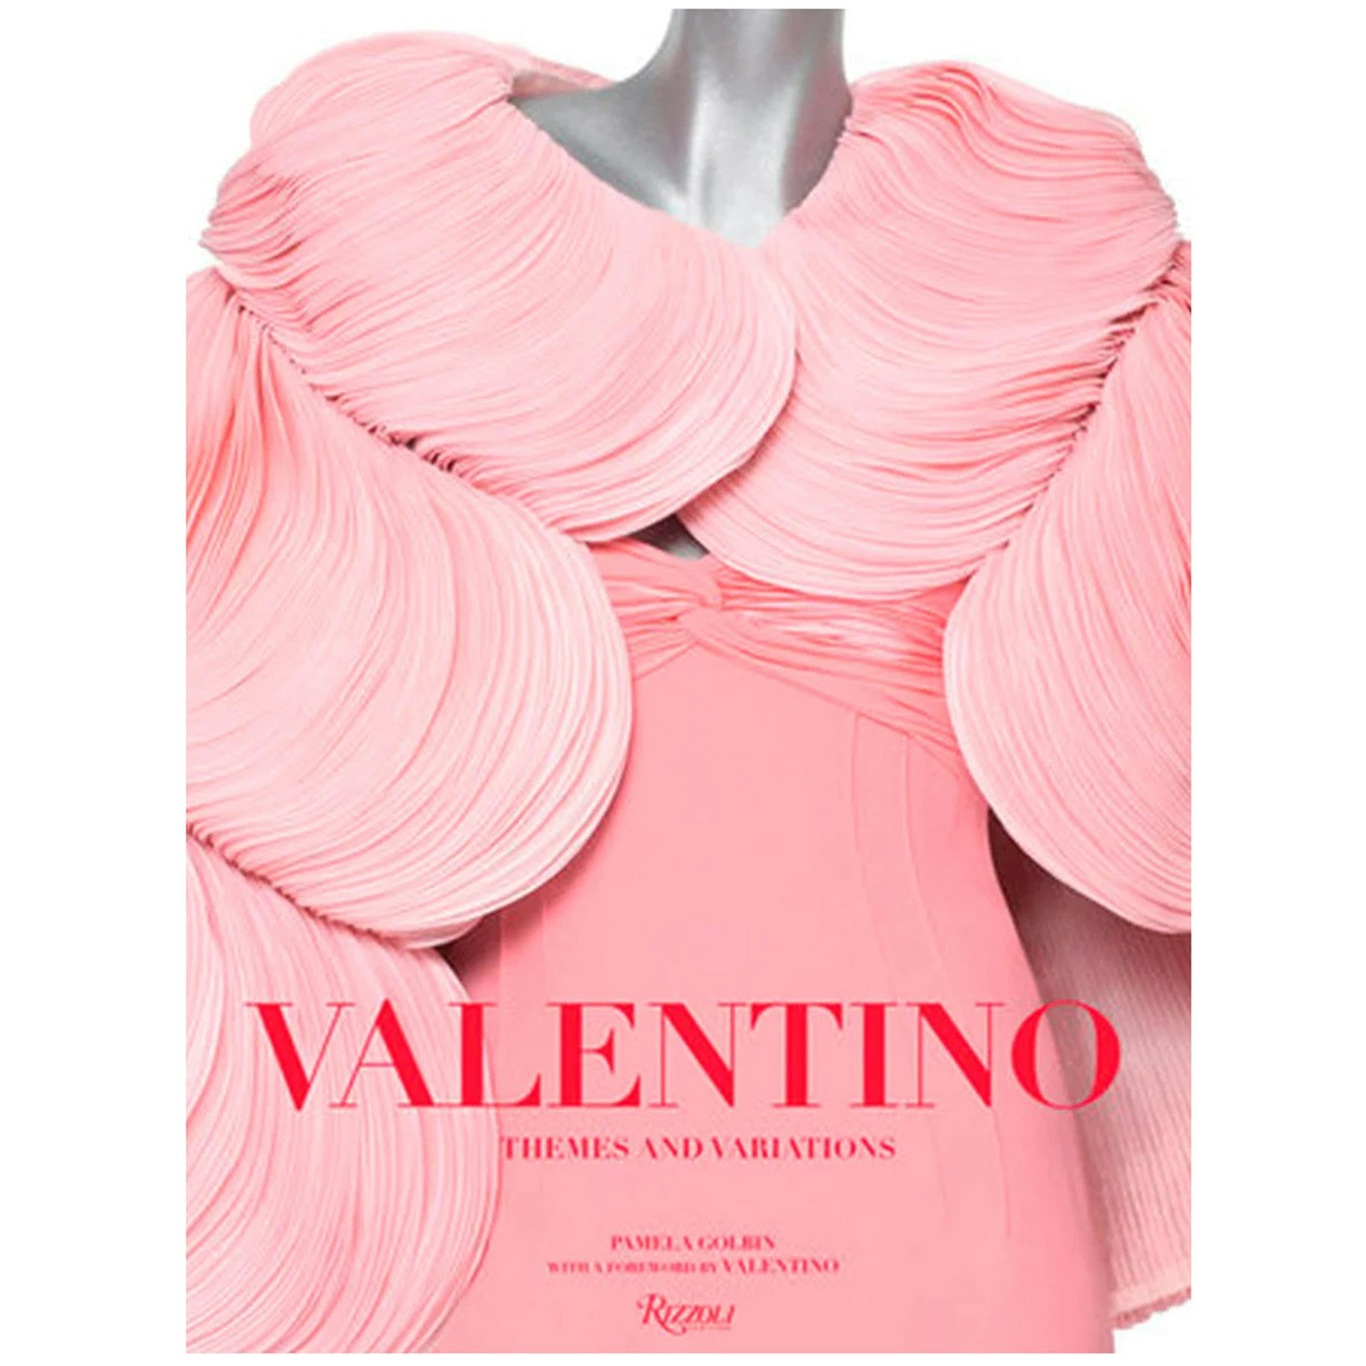 Valentino: Themes and Variations Kirja